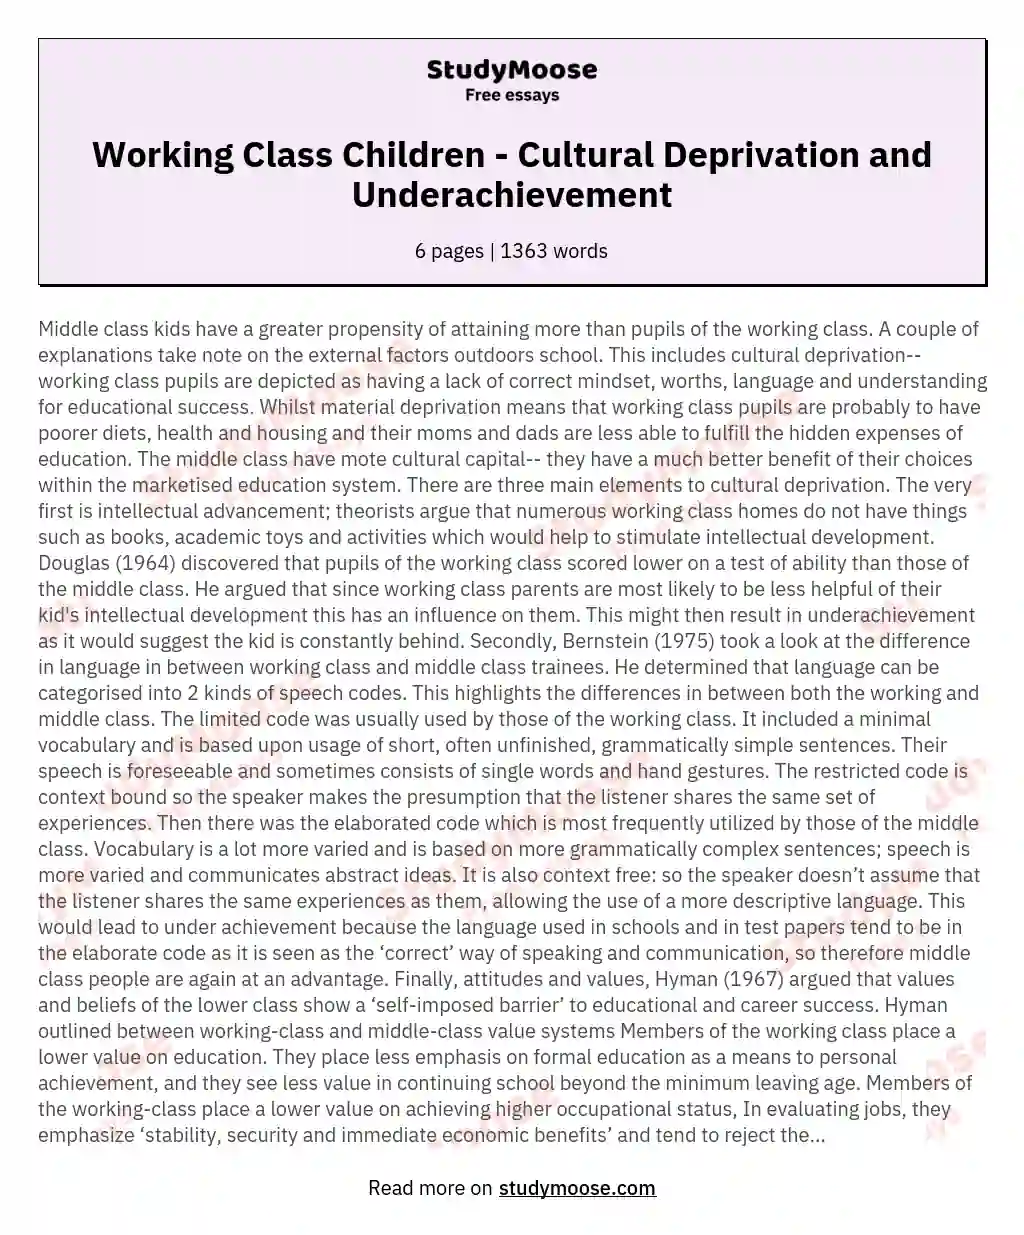 Working Class Children - Cultural Deprivation and Underachievement essay